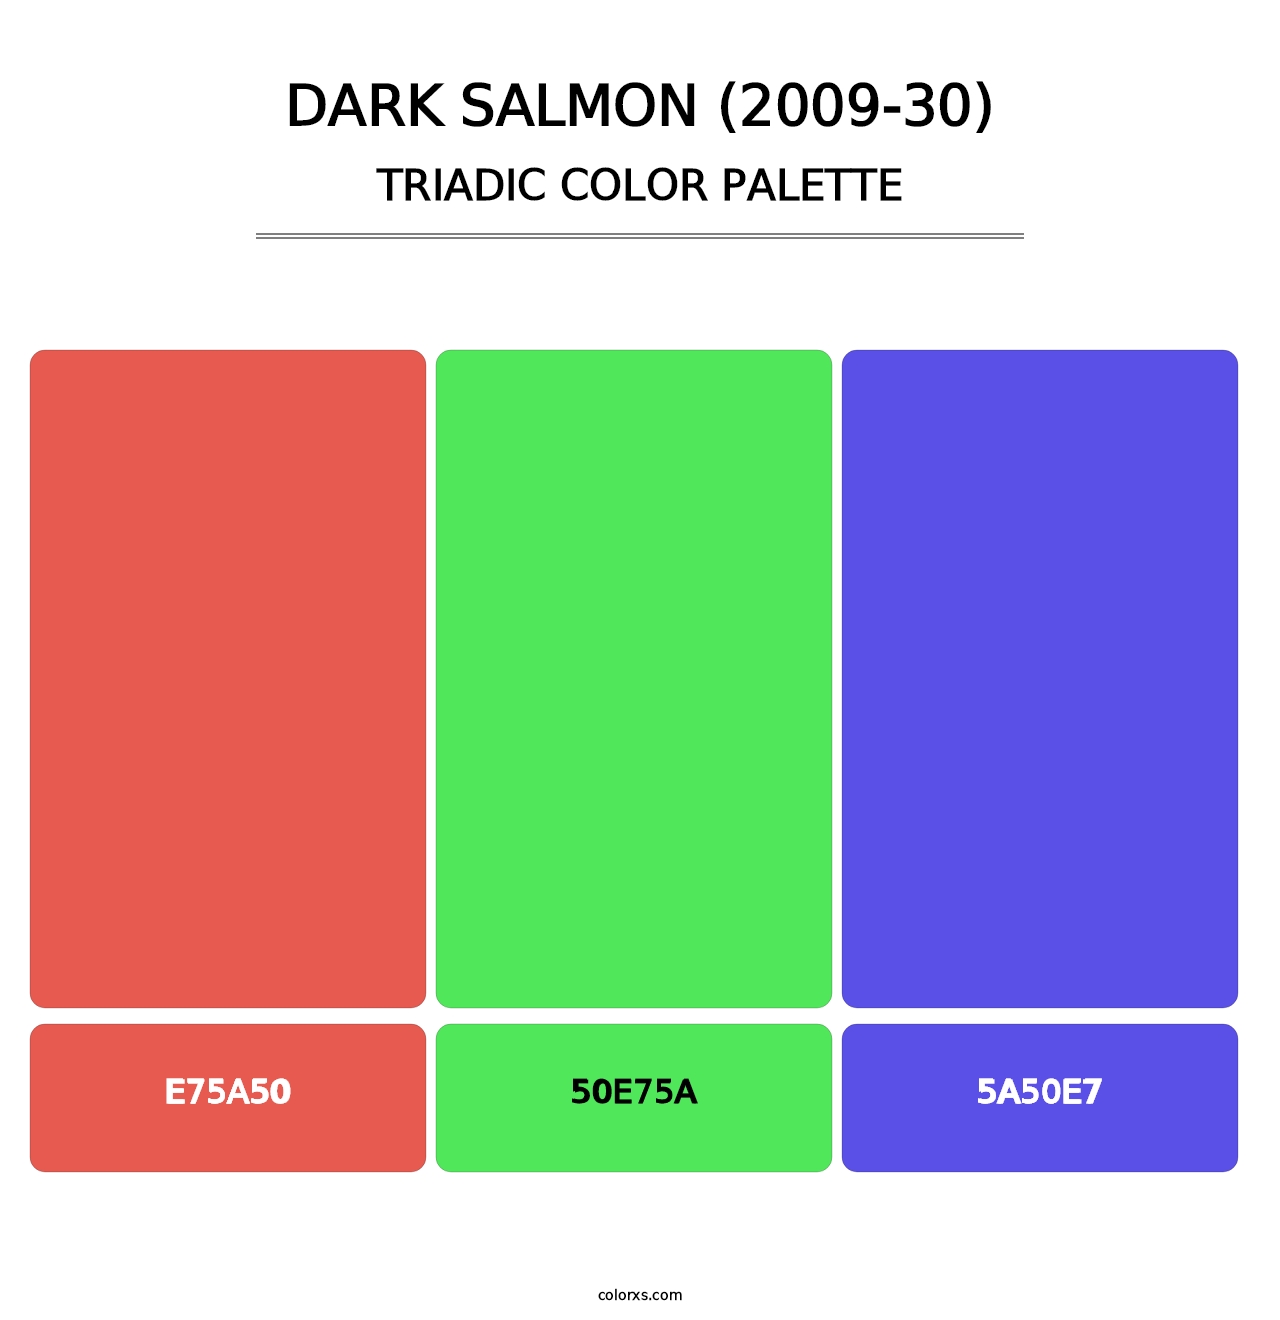 Dark Salmon (2009-30) - Triadic Color Palette